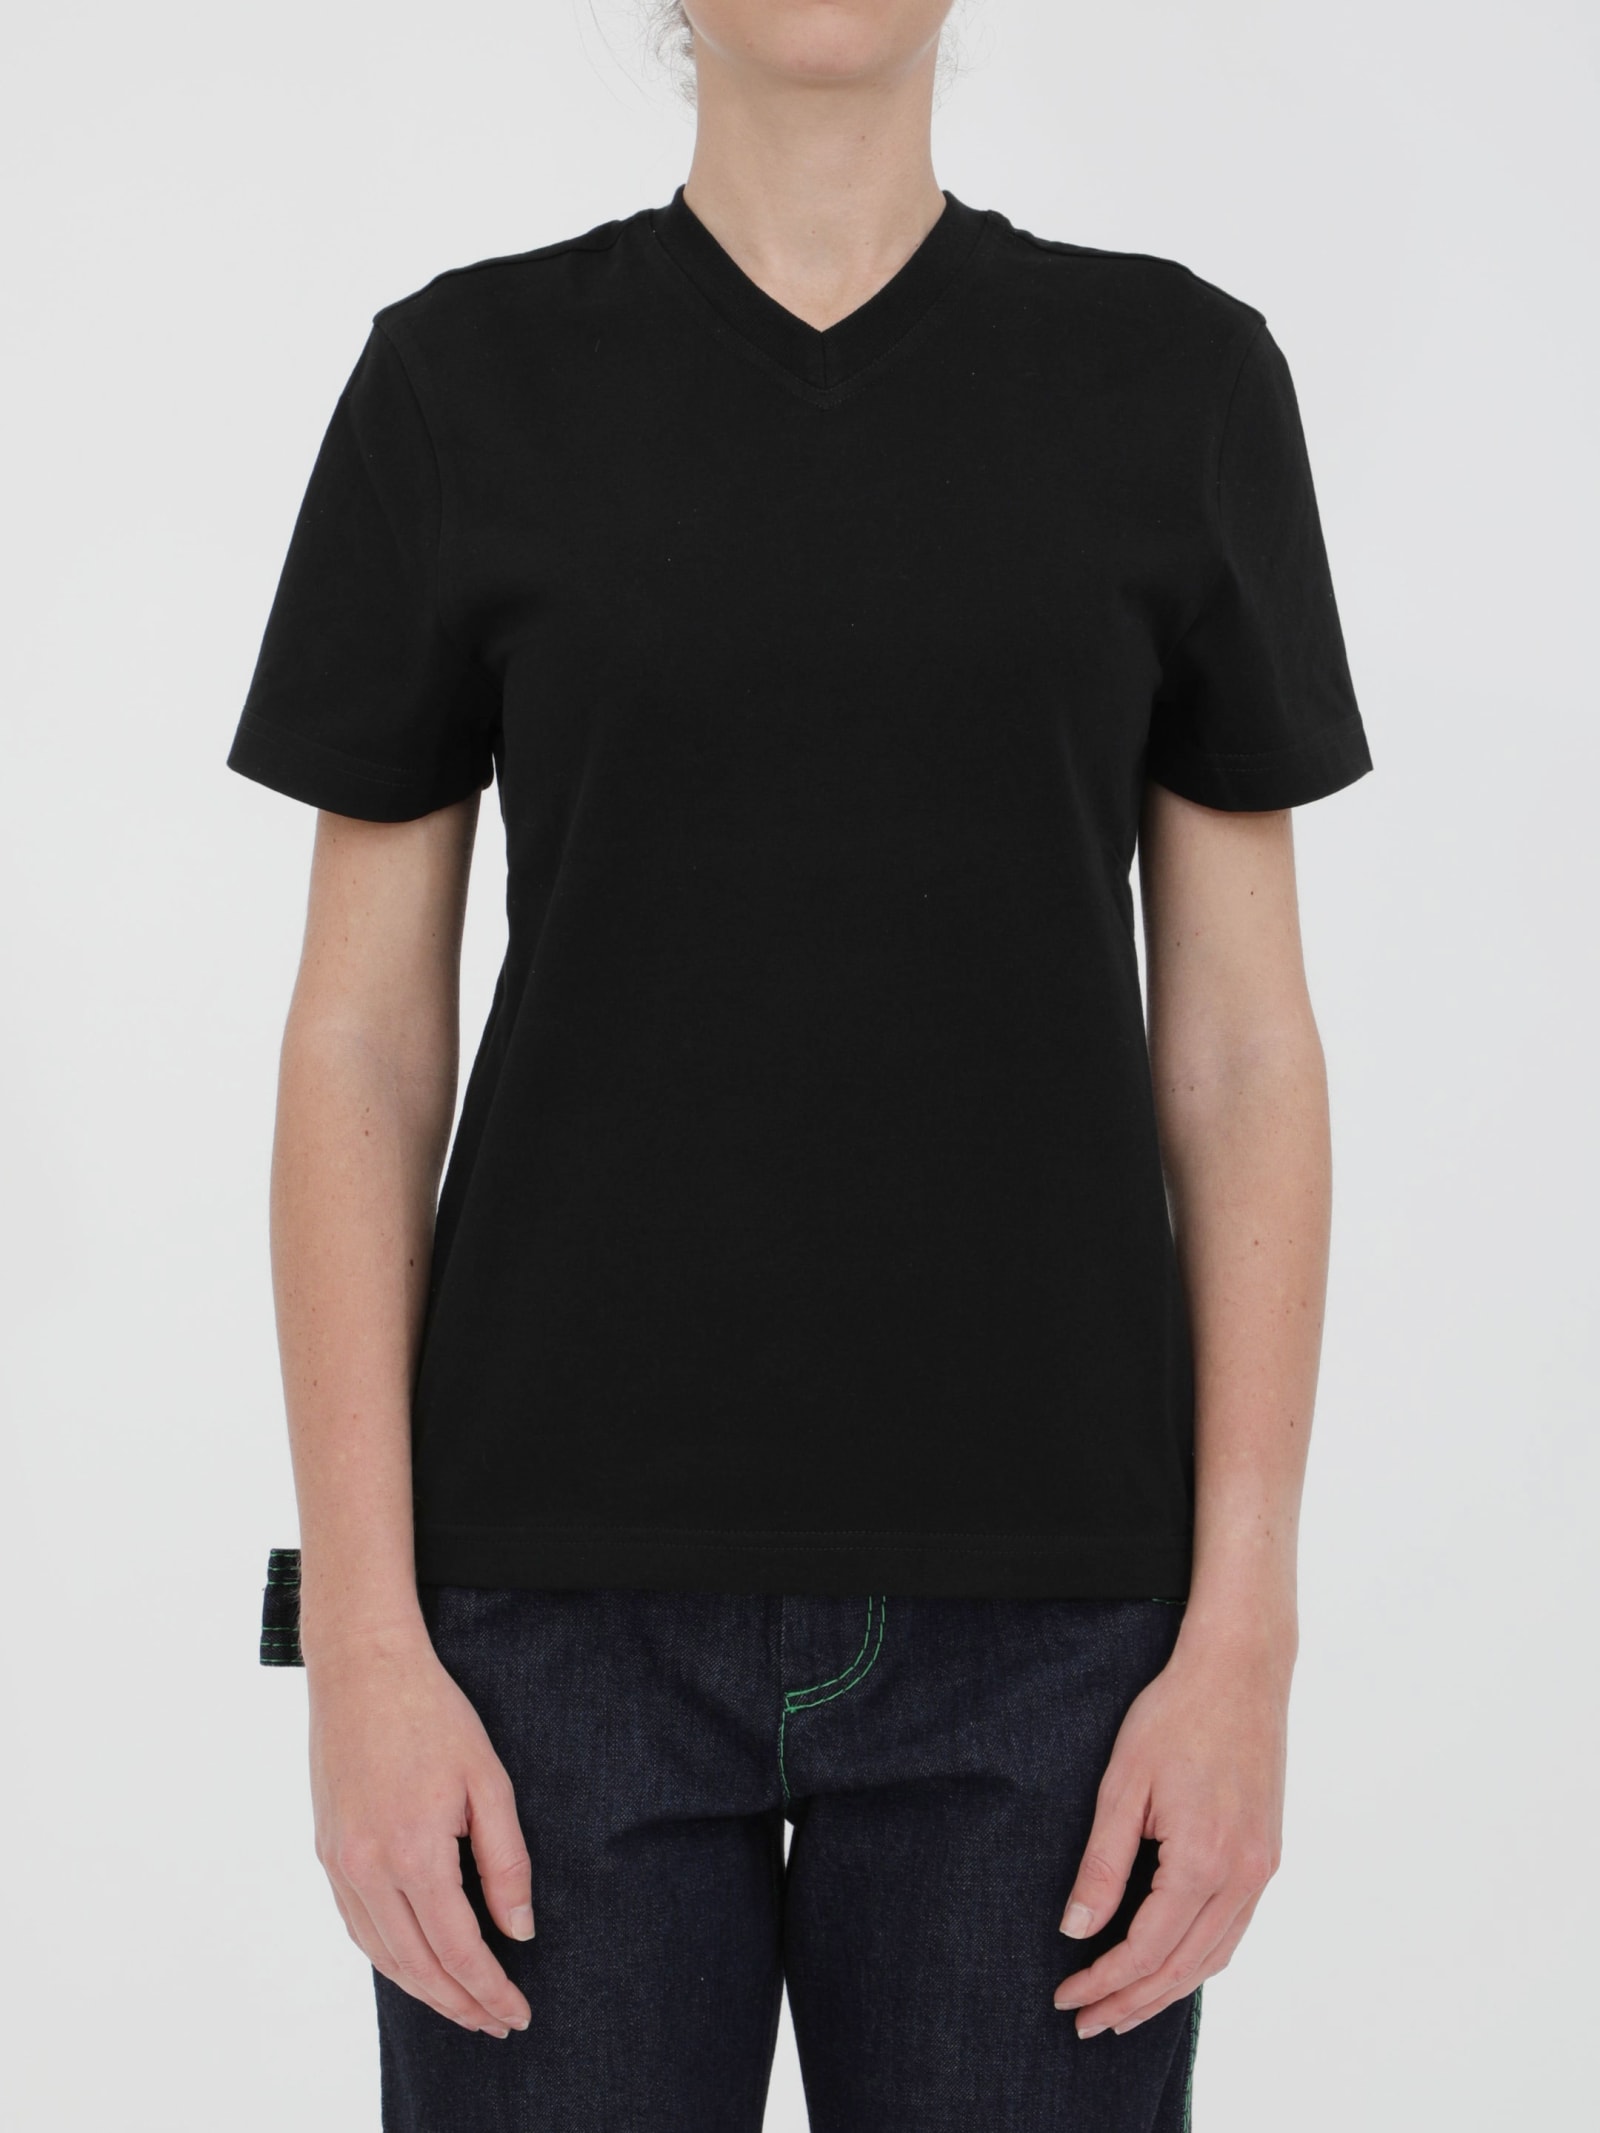 Bottega Veneta Black Cotton T-shirt